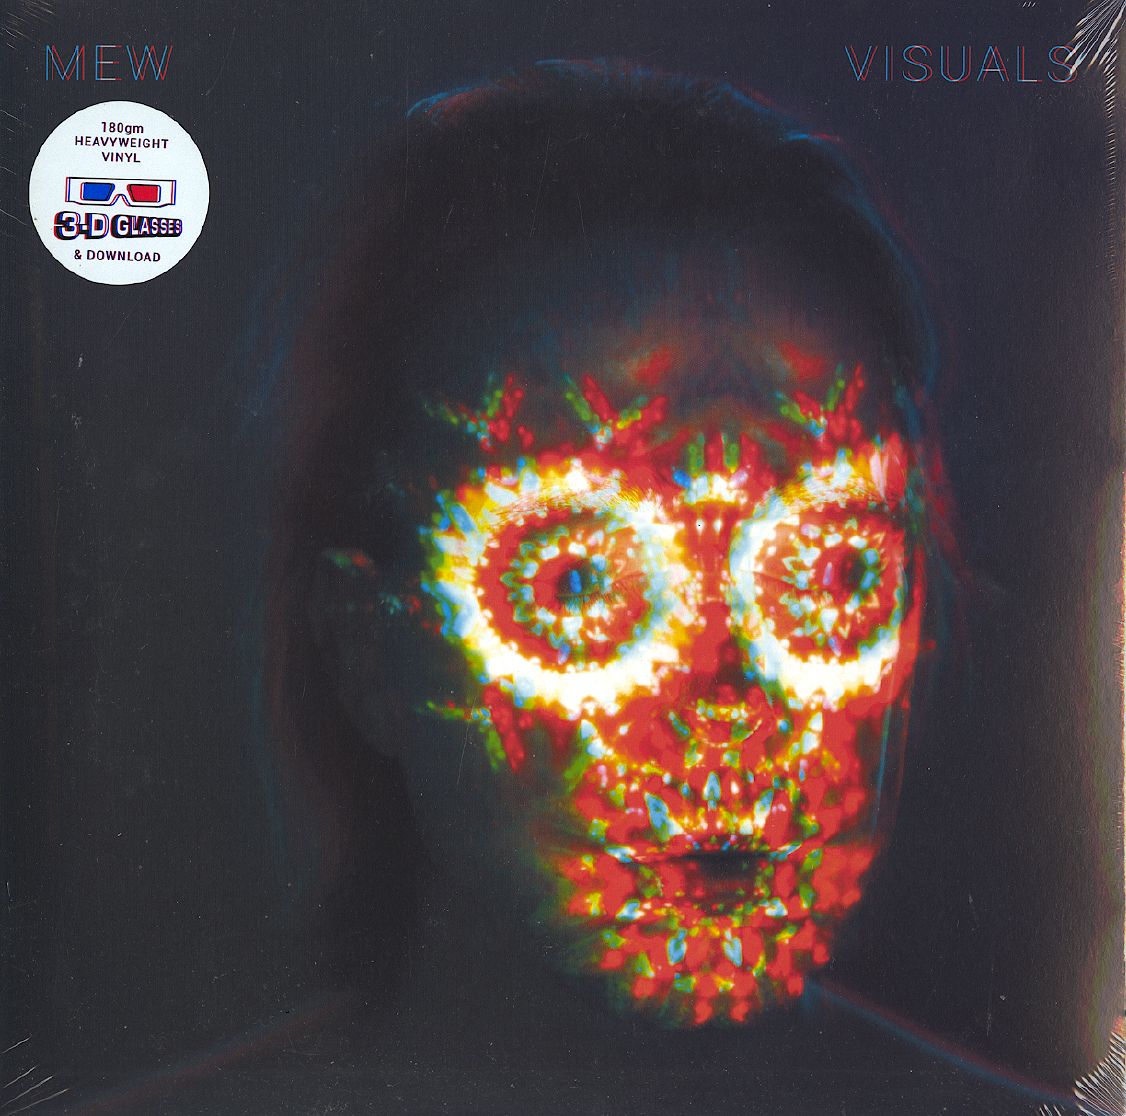 Mew - Visuals - Limited Edition Vinyl - 3-D